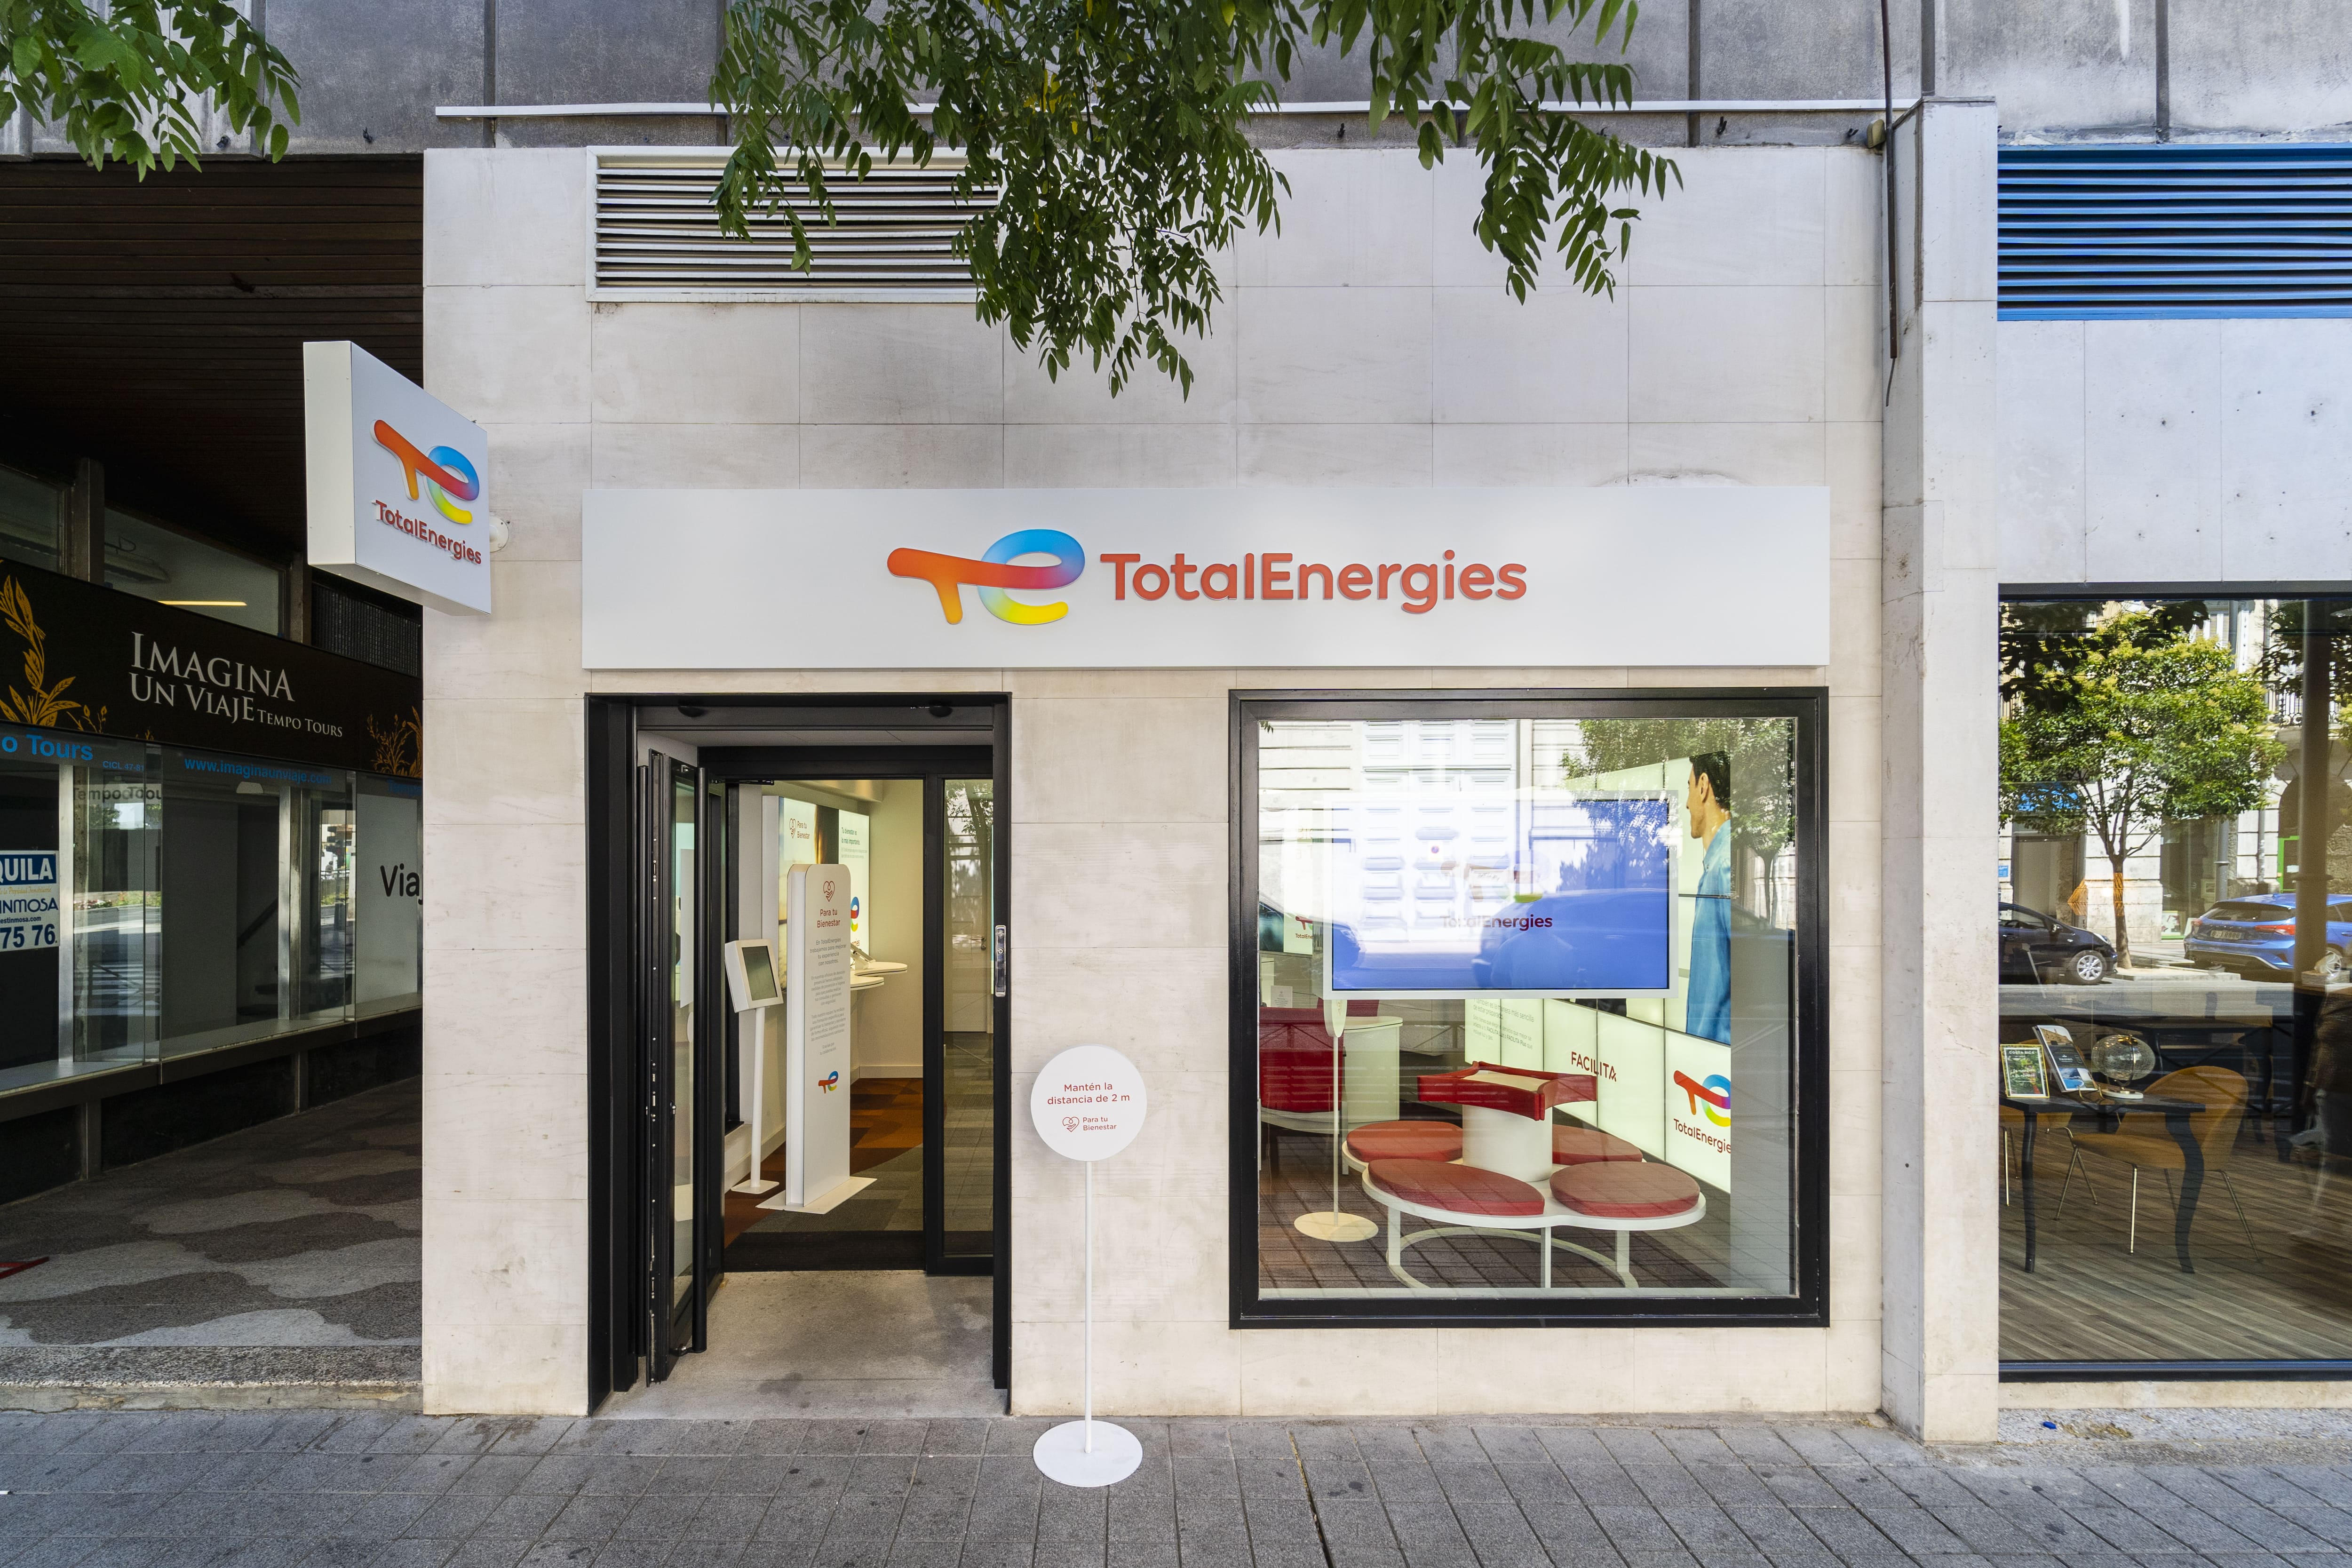 Oficina TotalEnergies Valladolid